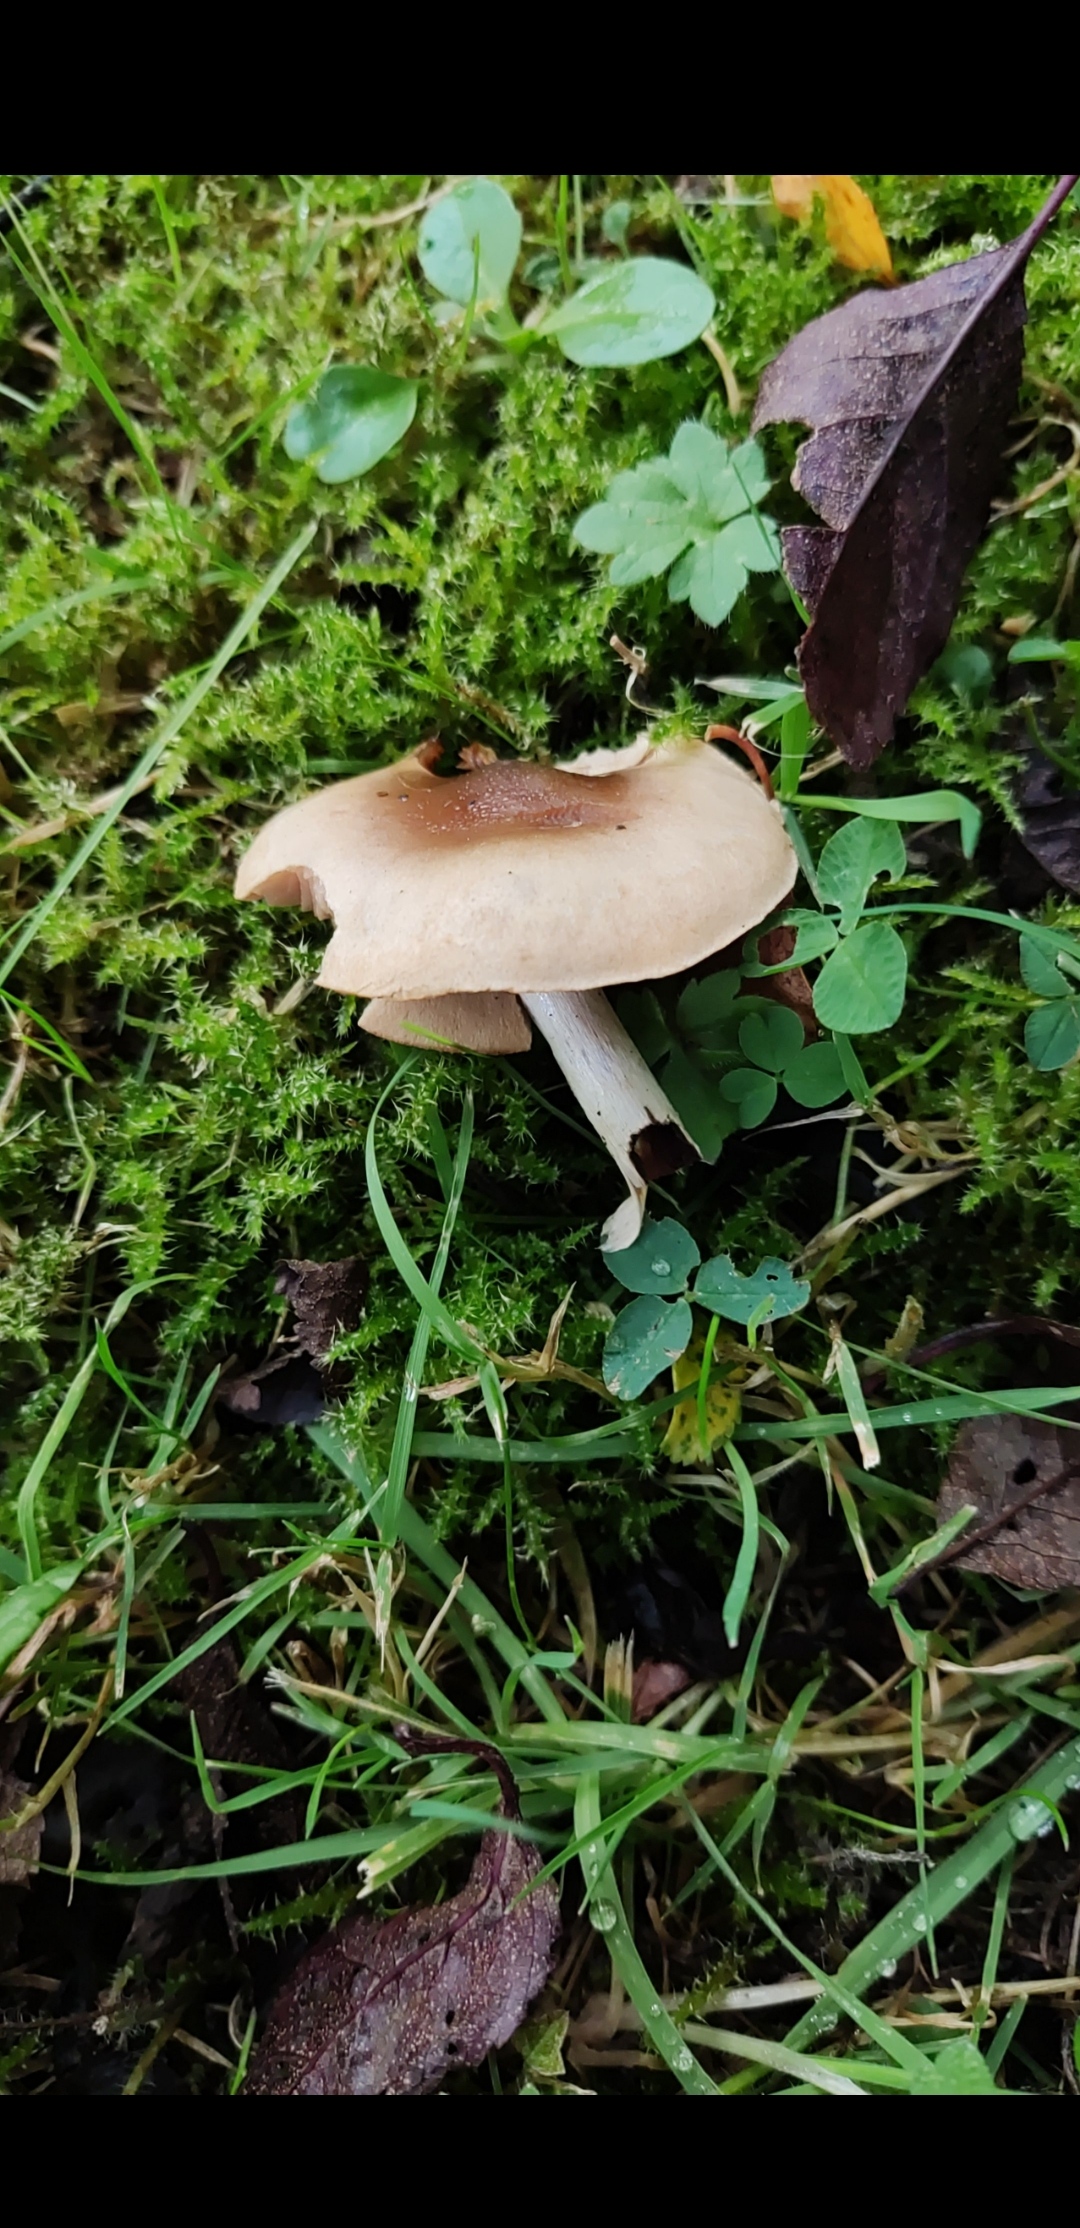 A brown-white mushroom